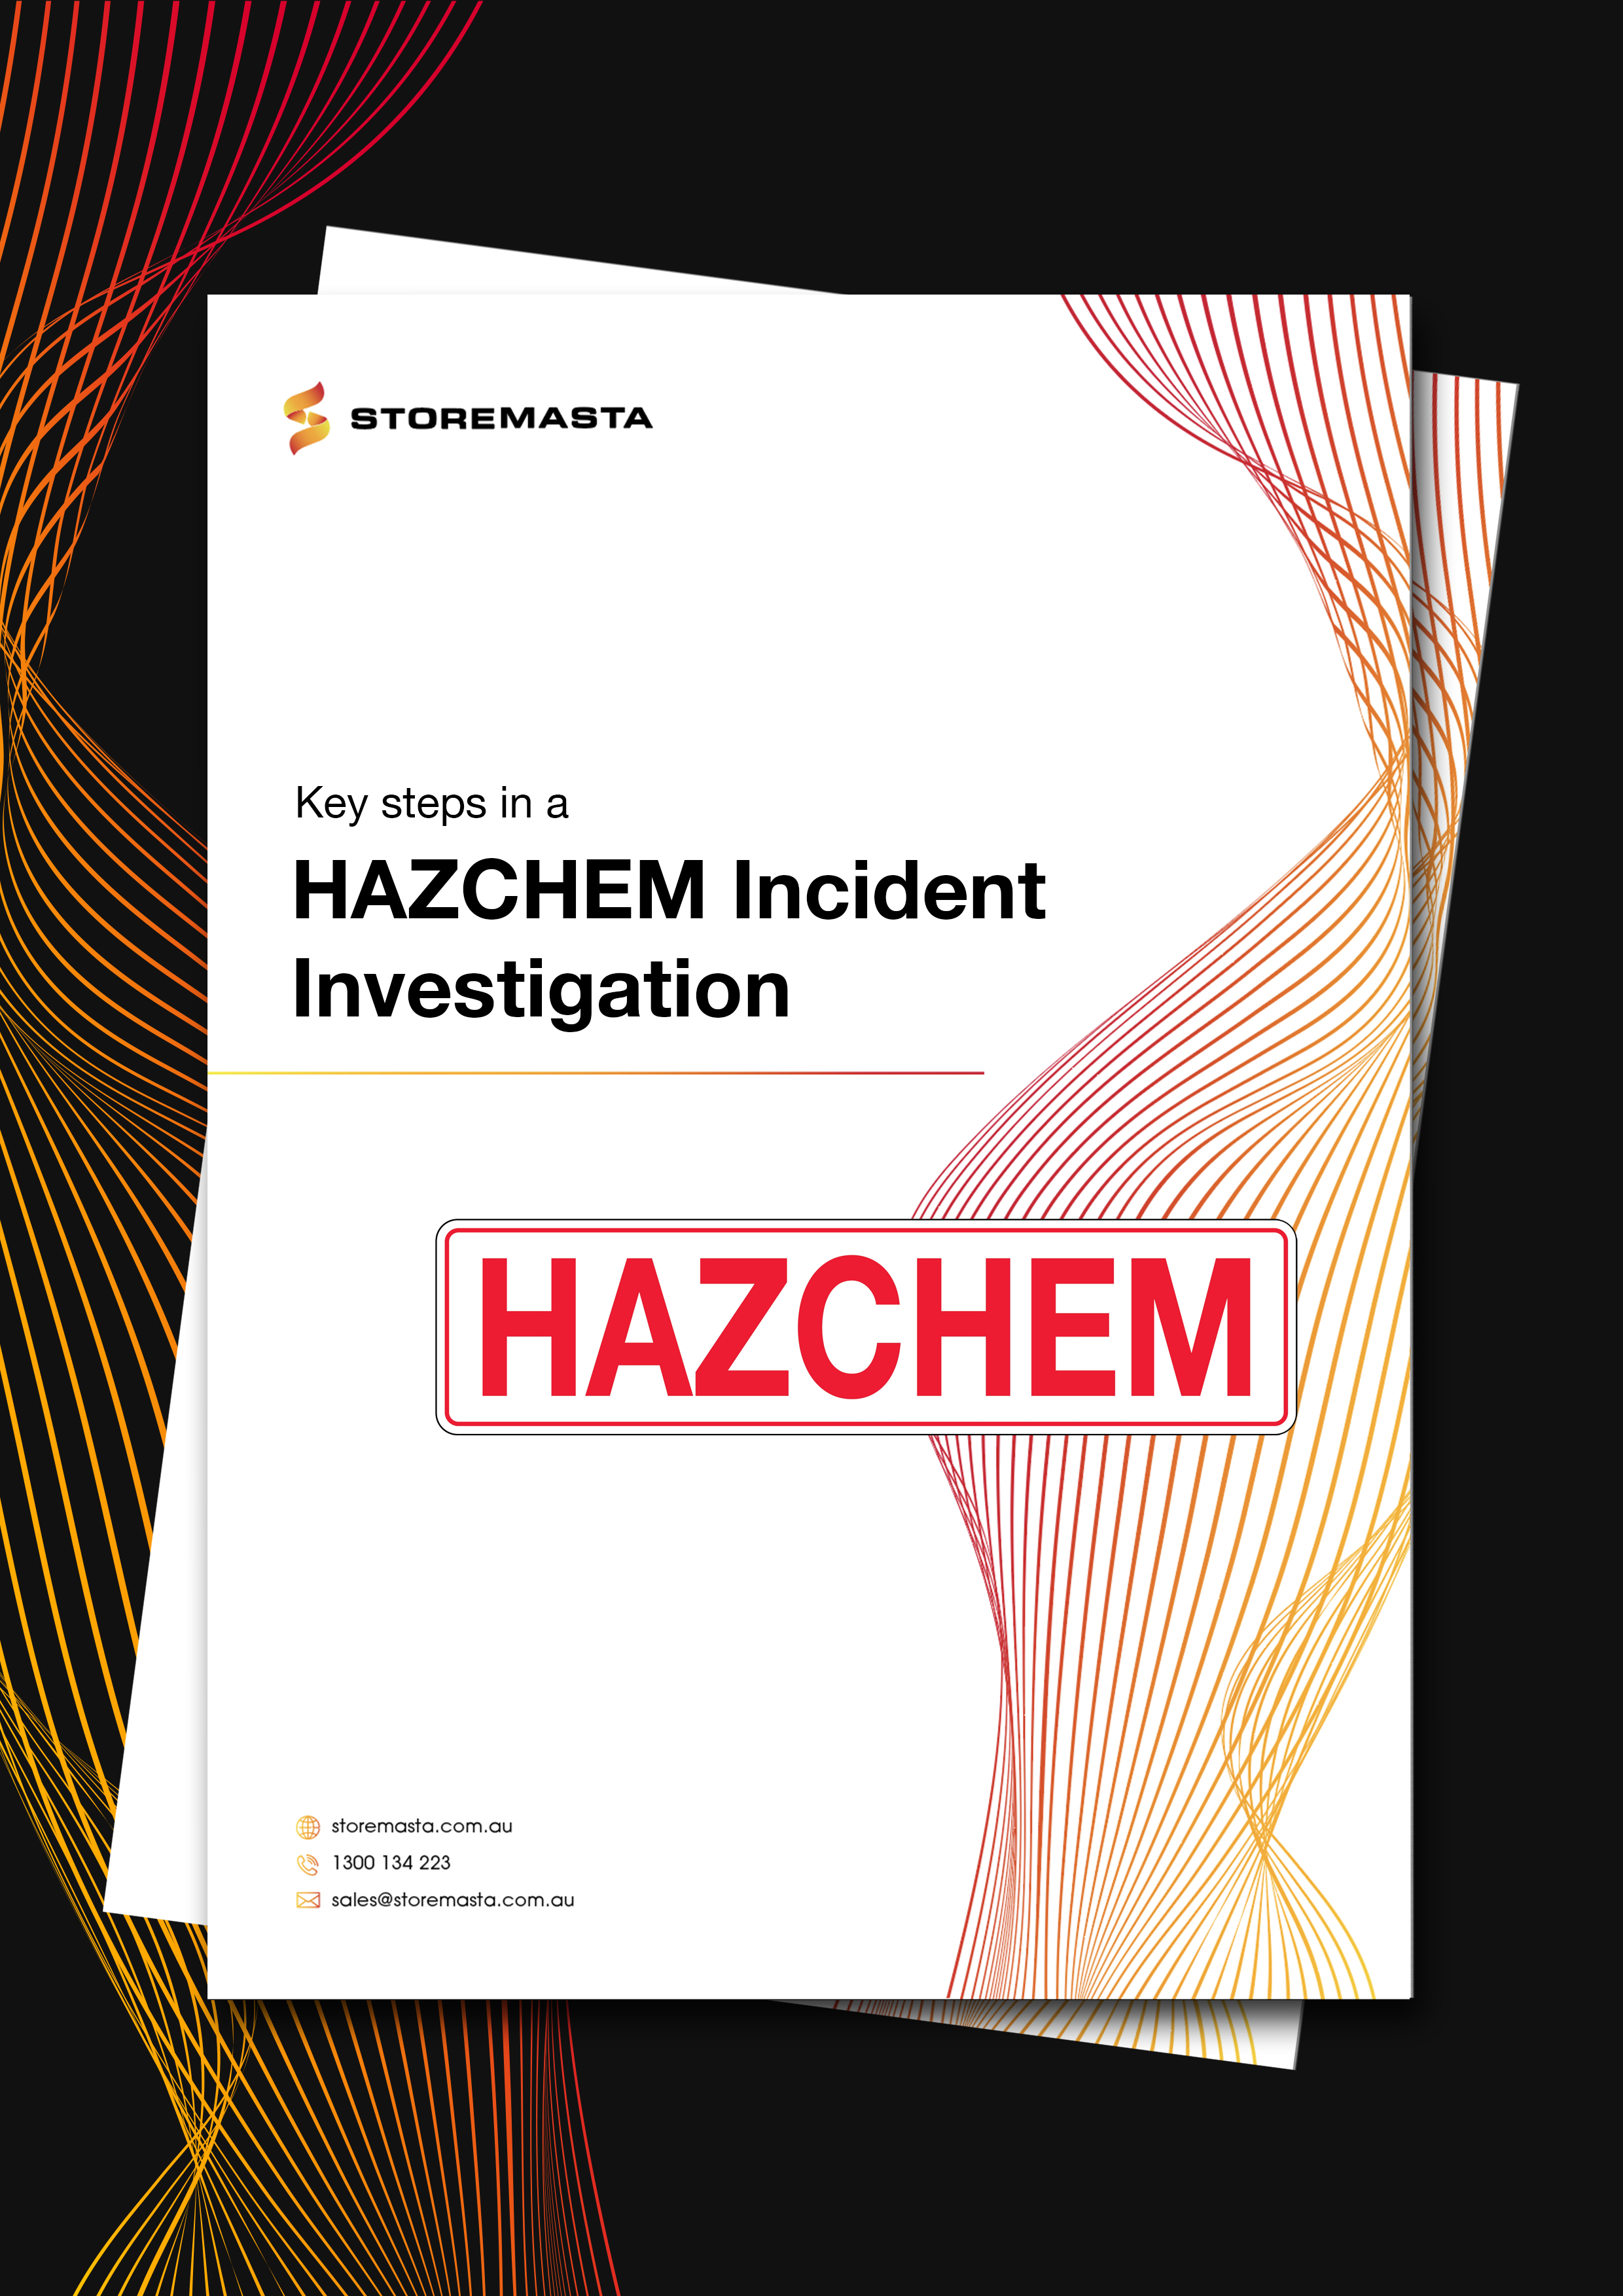 HAZCHEM investigation